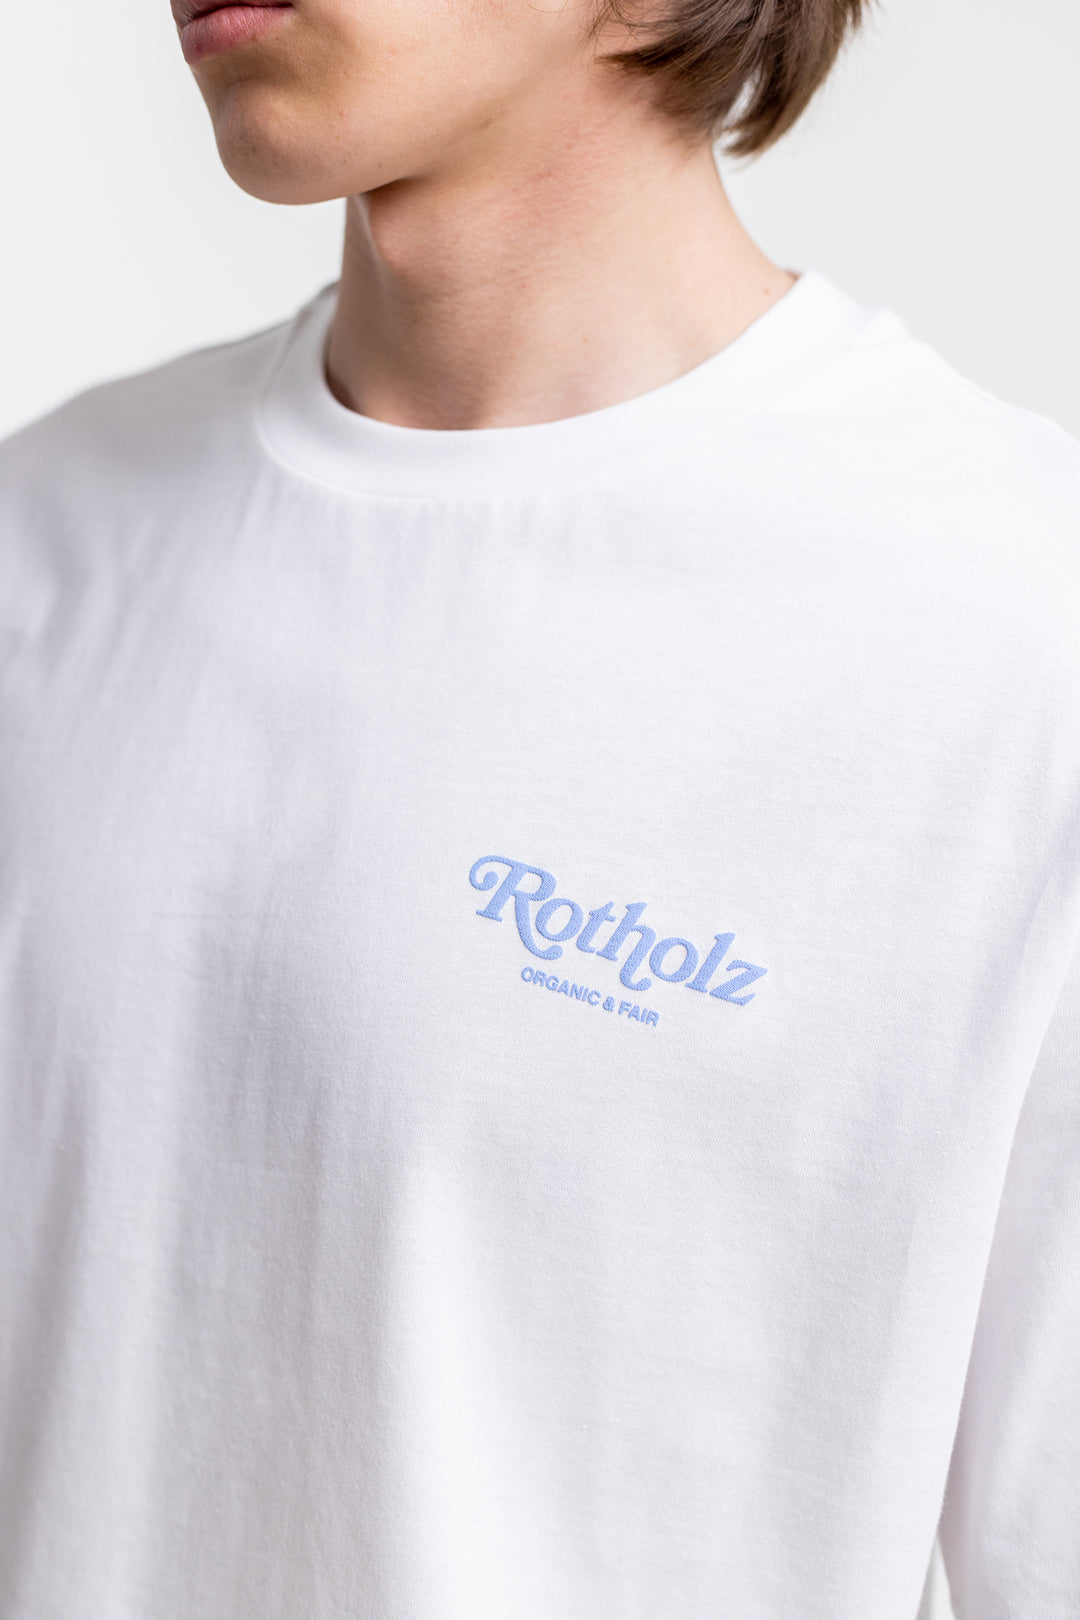 Retro Logo T-Shirt Weiss